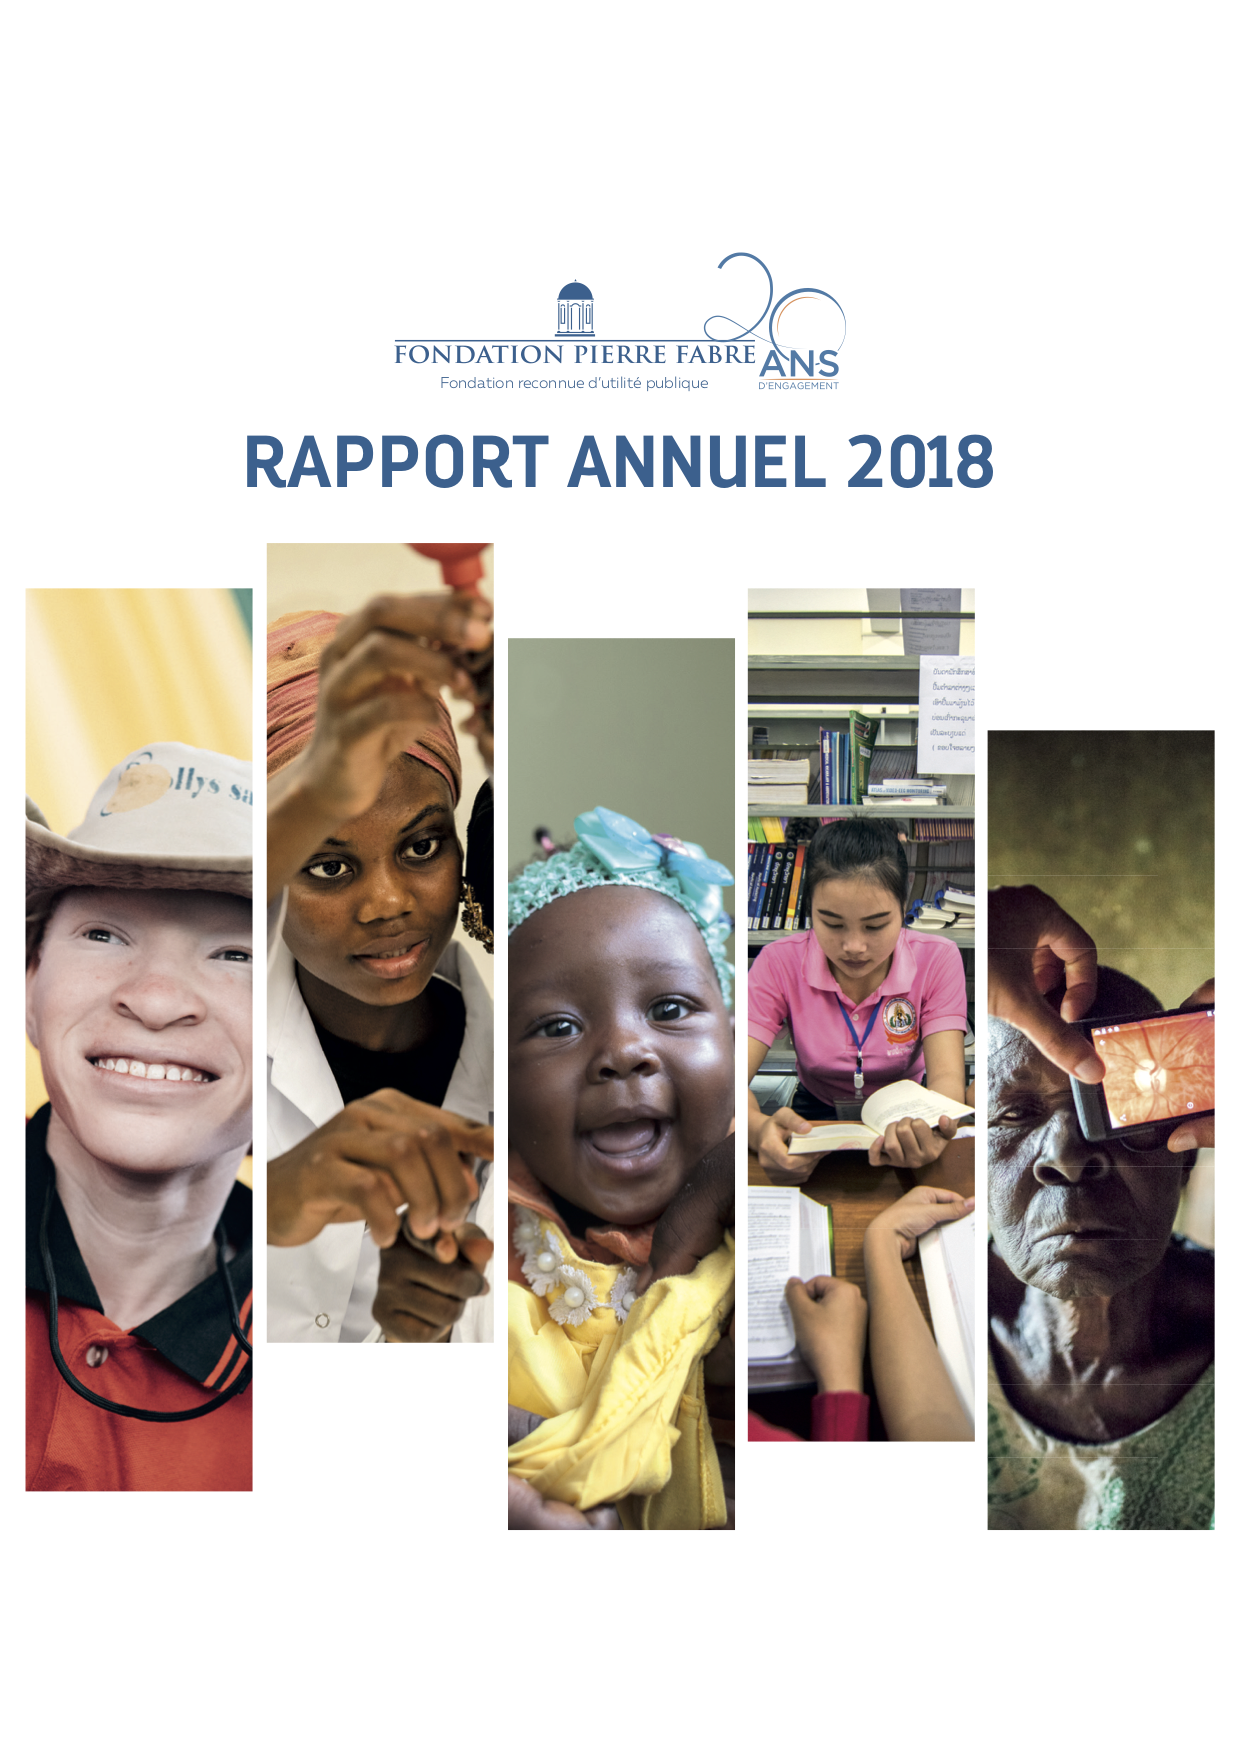 Fondation Pierre Fabre - Rapport annuel 2018